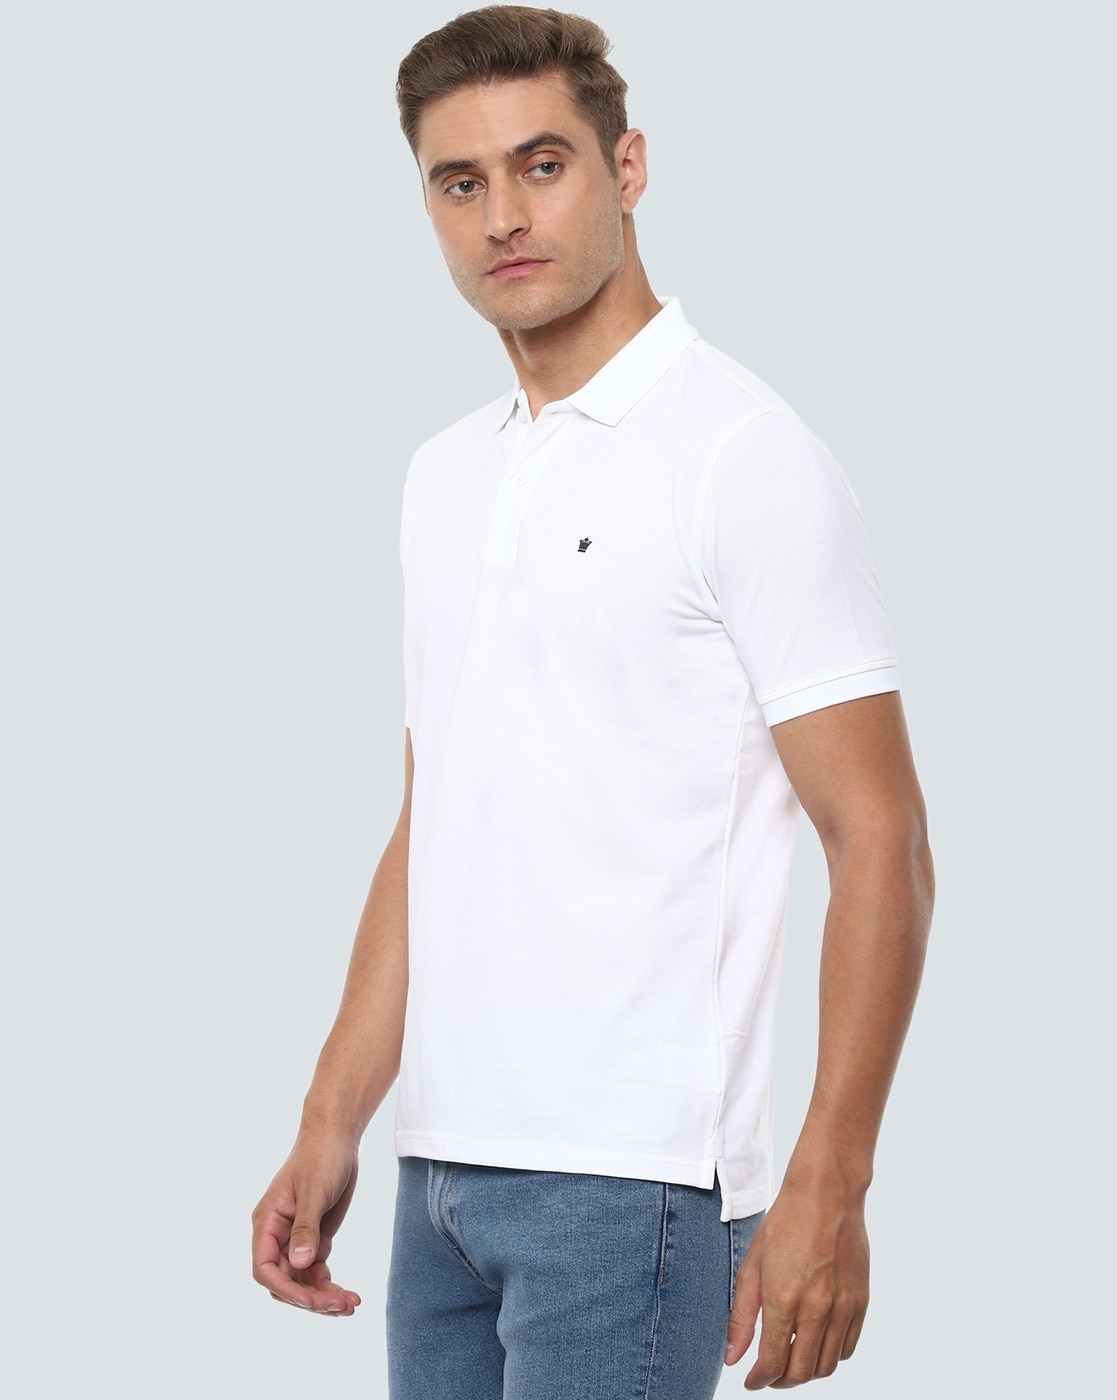 T-Shirts & Shirts, LOUIS PHILIPPE Light Grey T-Shirt (Men)